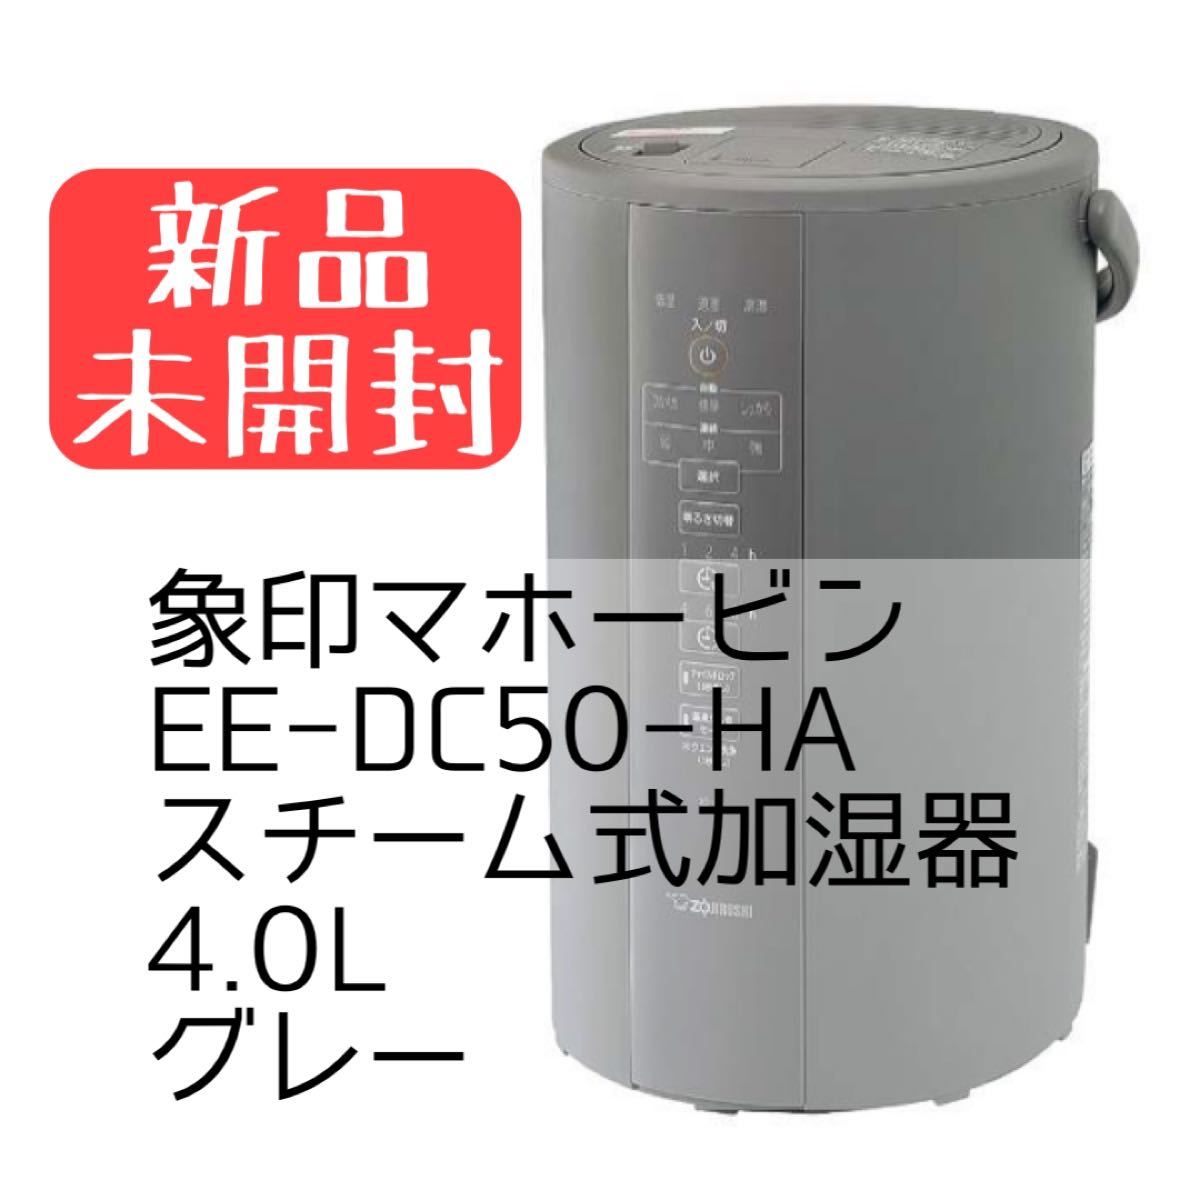 SALE／37%OFF】 象印スチーム式加湿器 EE-DC50-HA 4.0L グレー kead.al